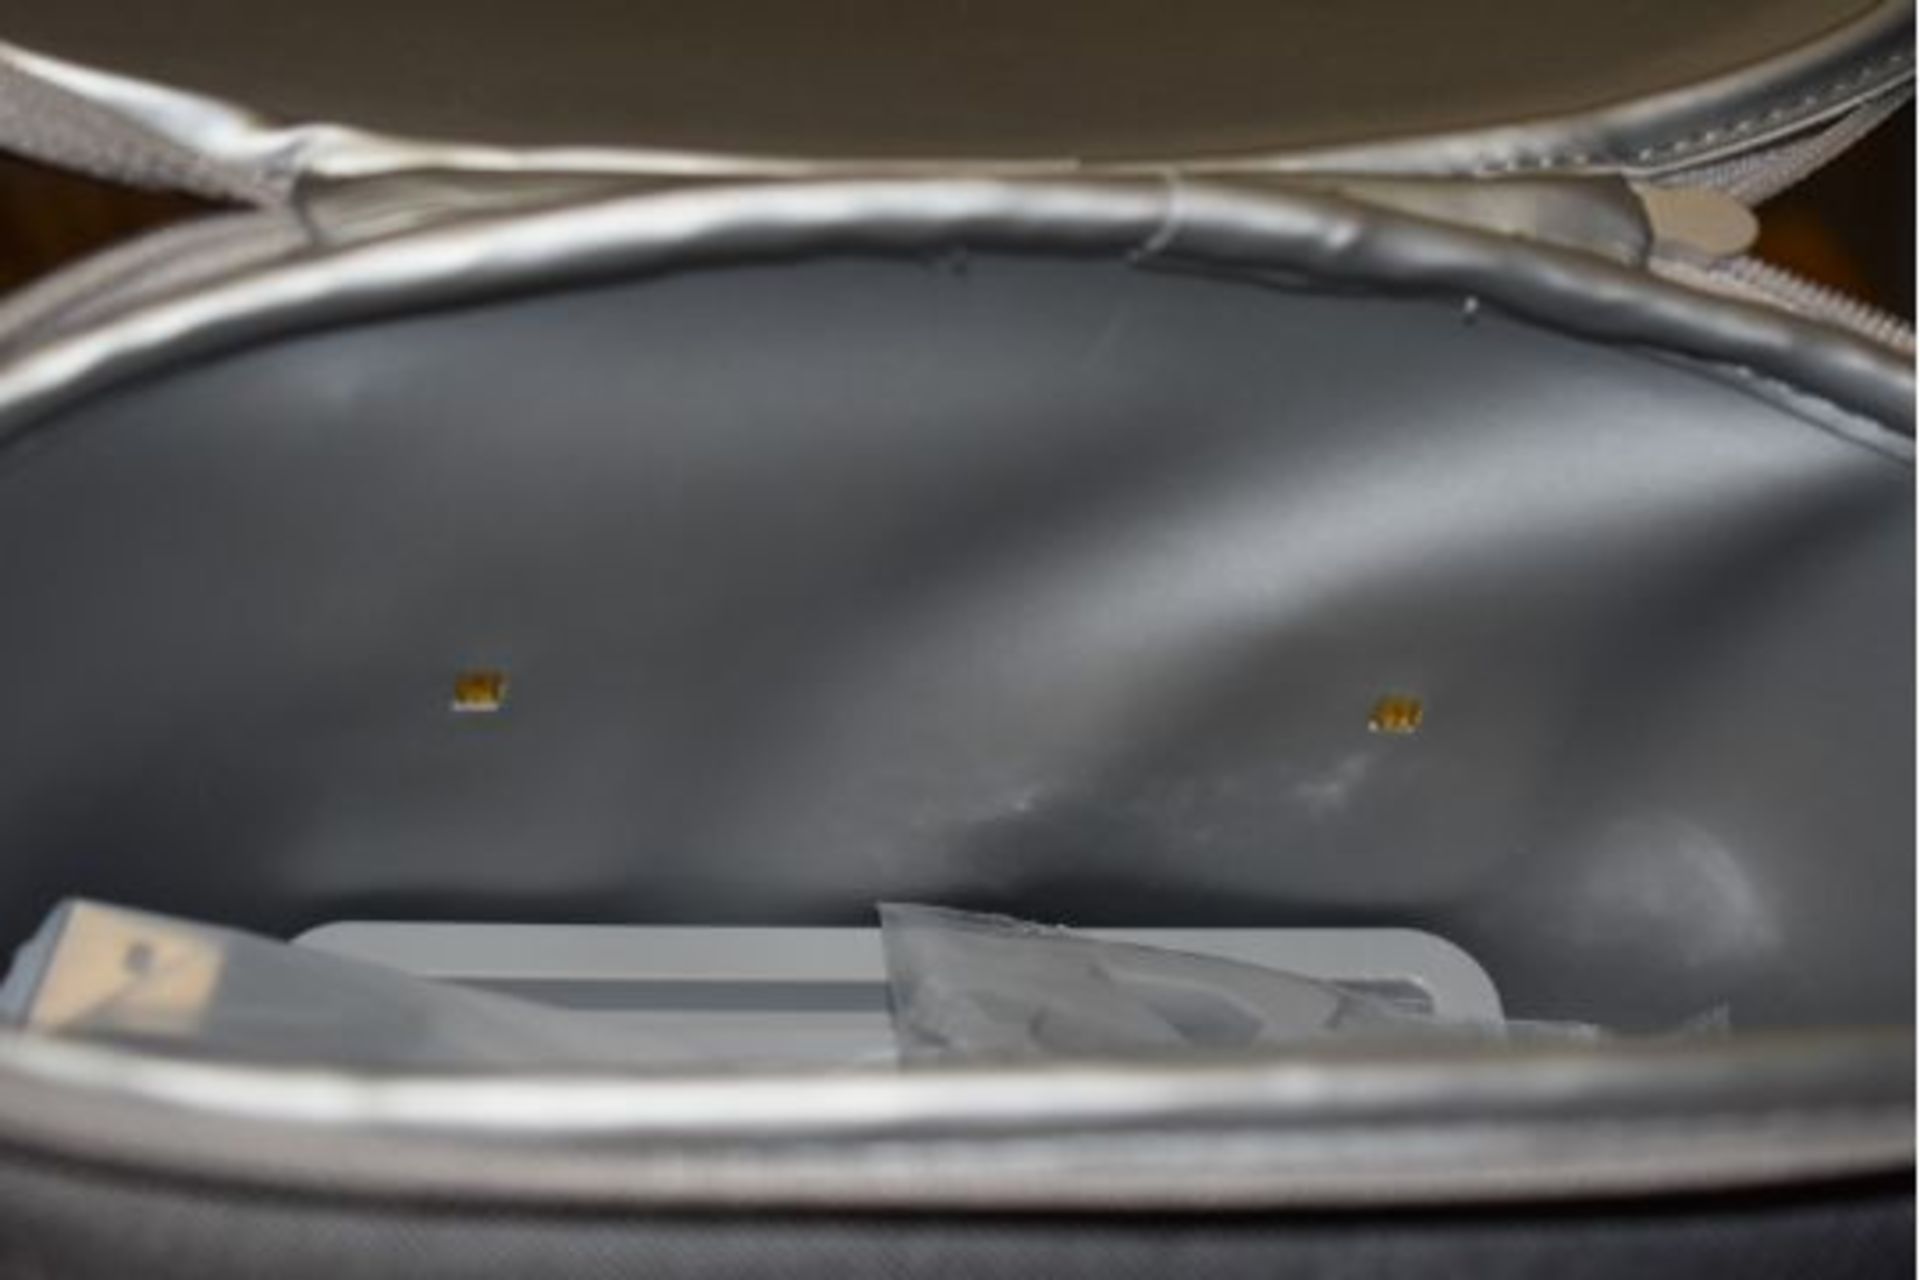 1 x Homedics UV Clean Portable Sanitiser Bag - Kills Upto 99.9% of Bacteria & Viruses in Just 60 - Image 9 of 24